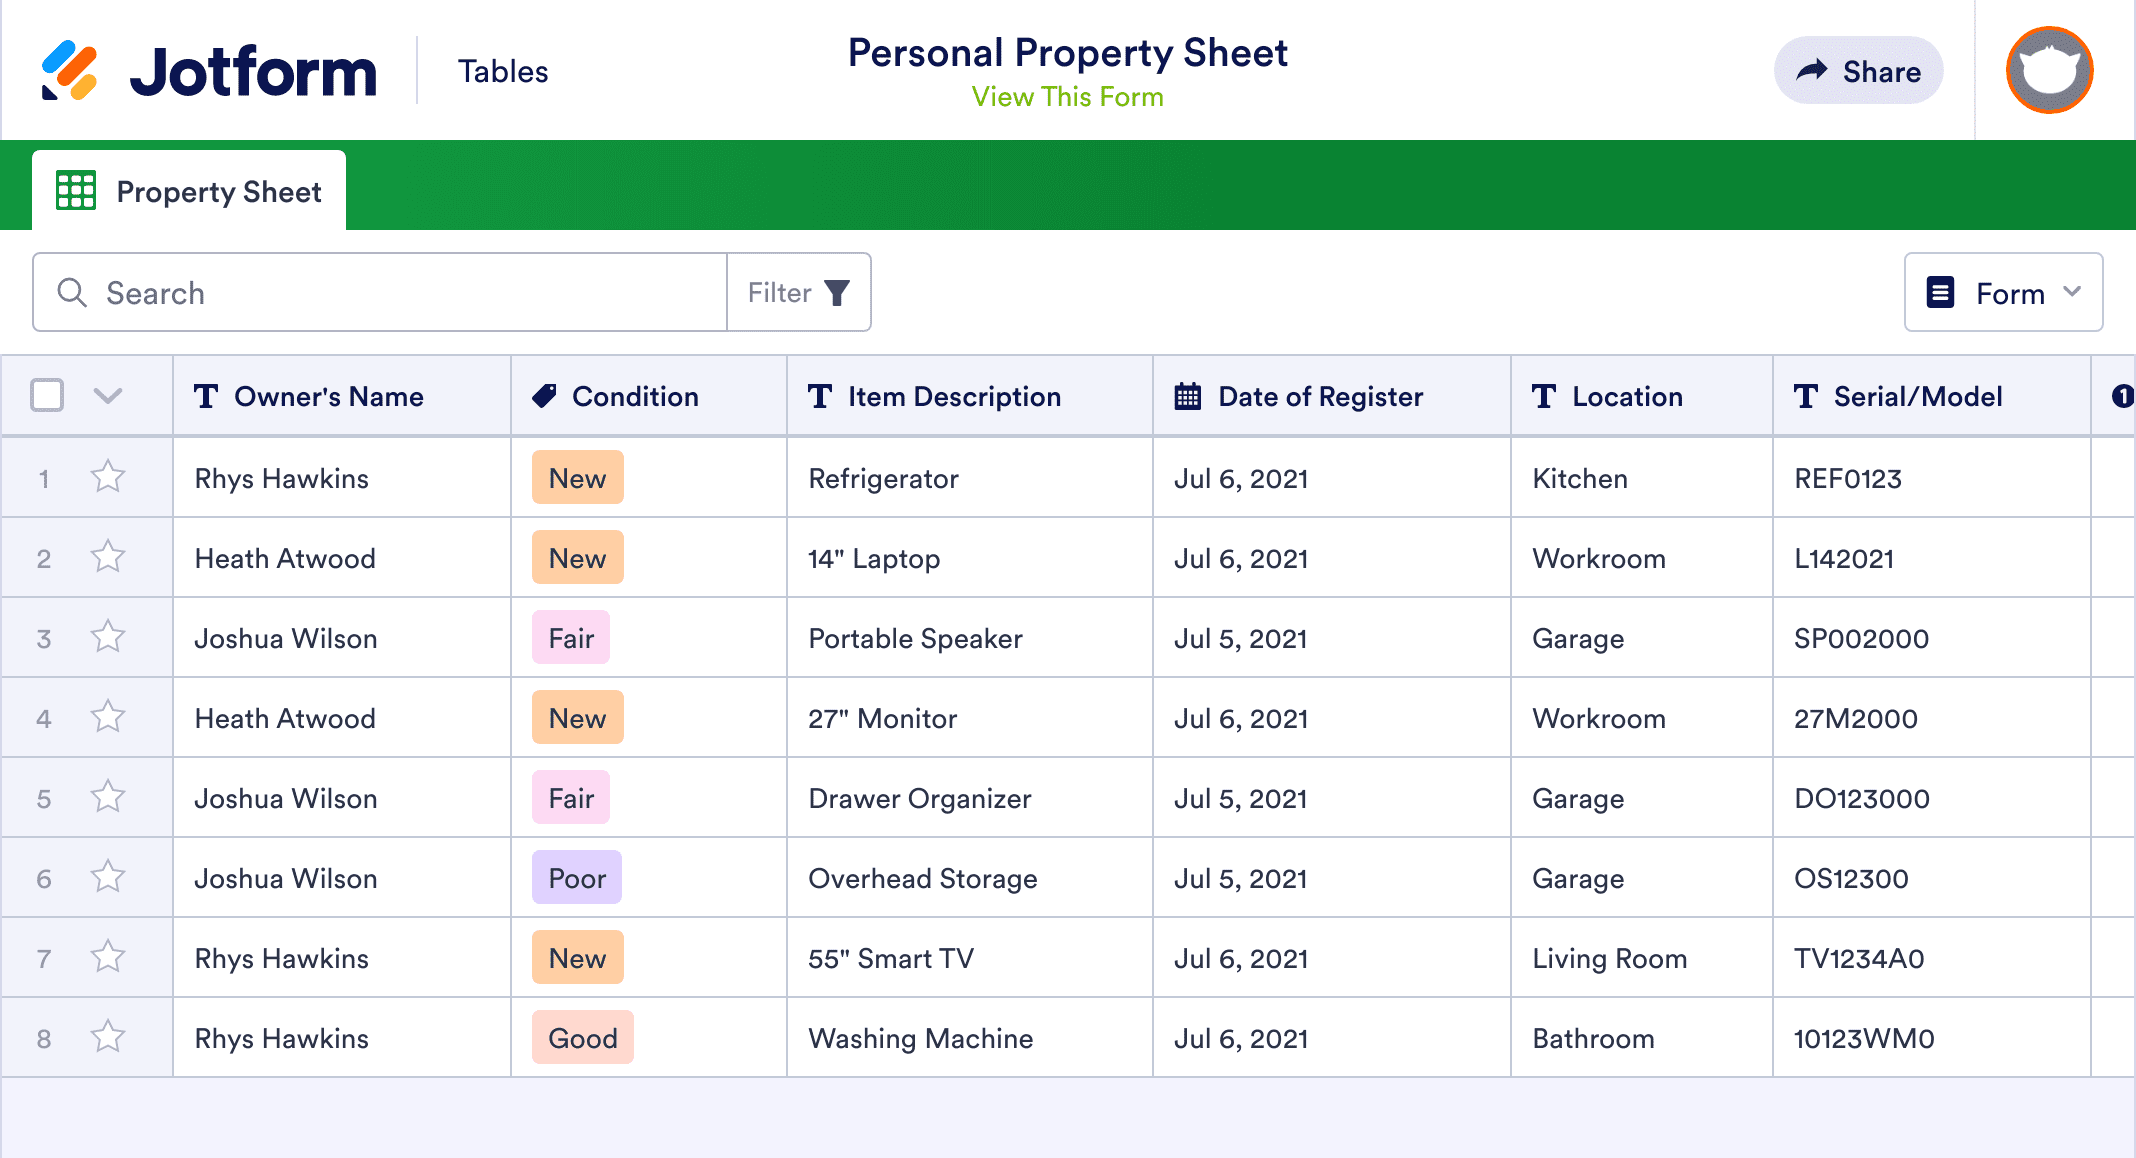 Personal Property Sheet